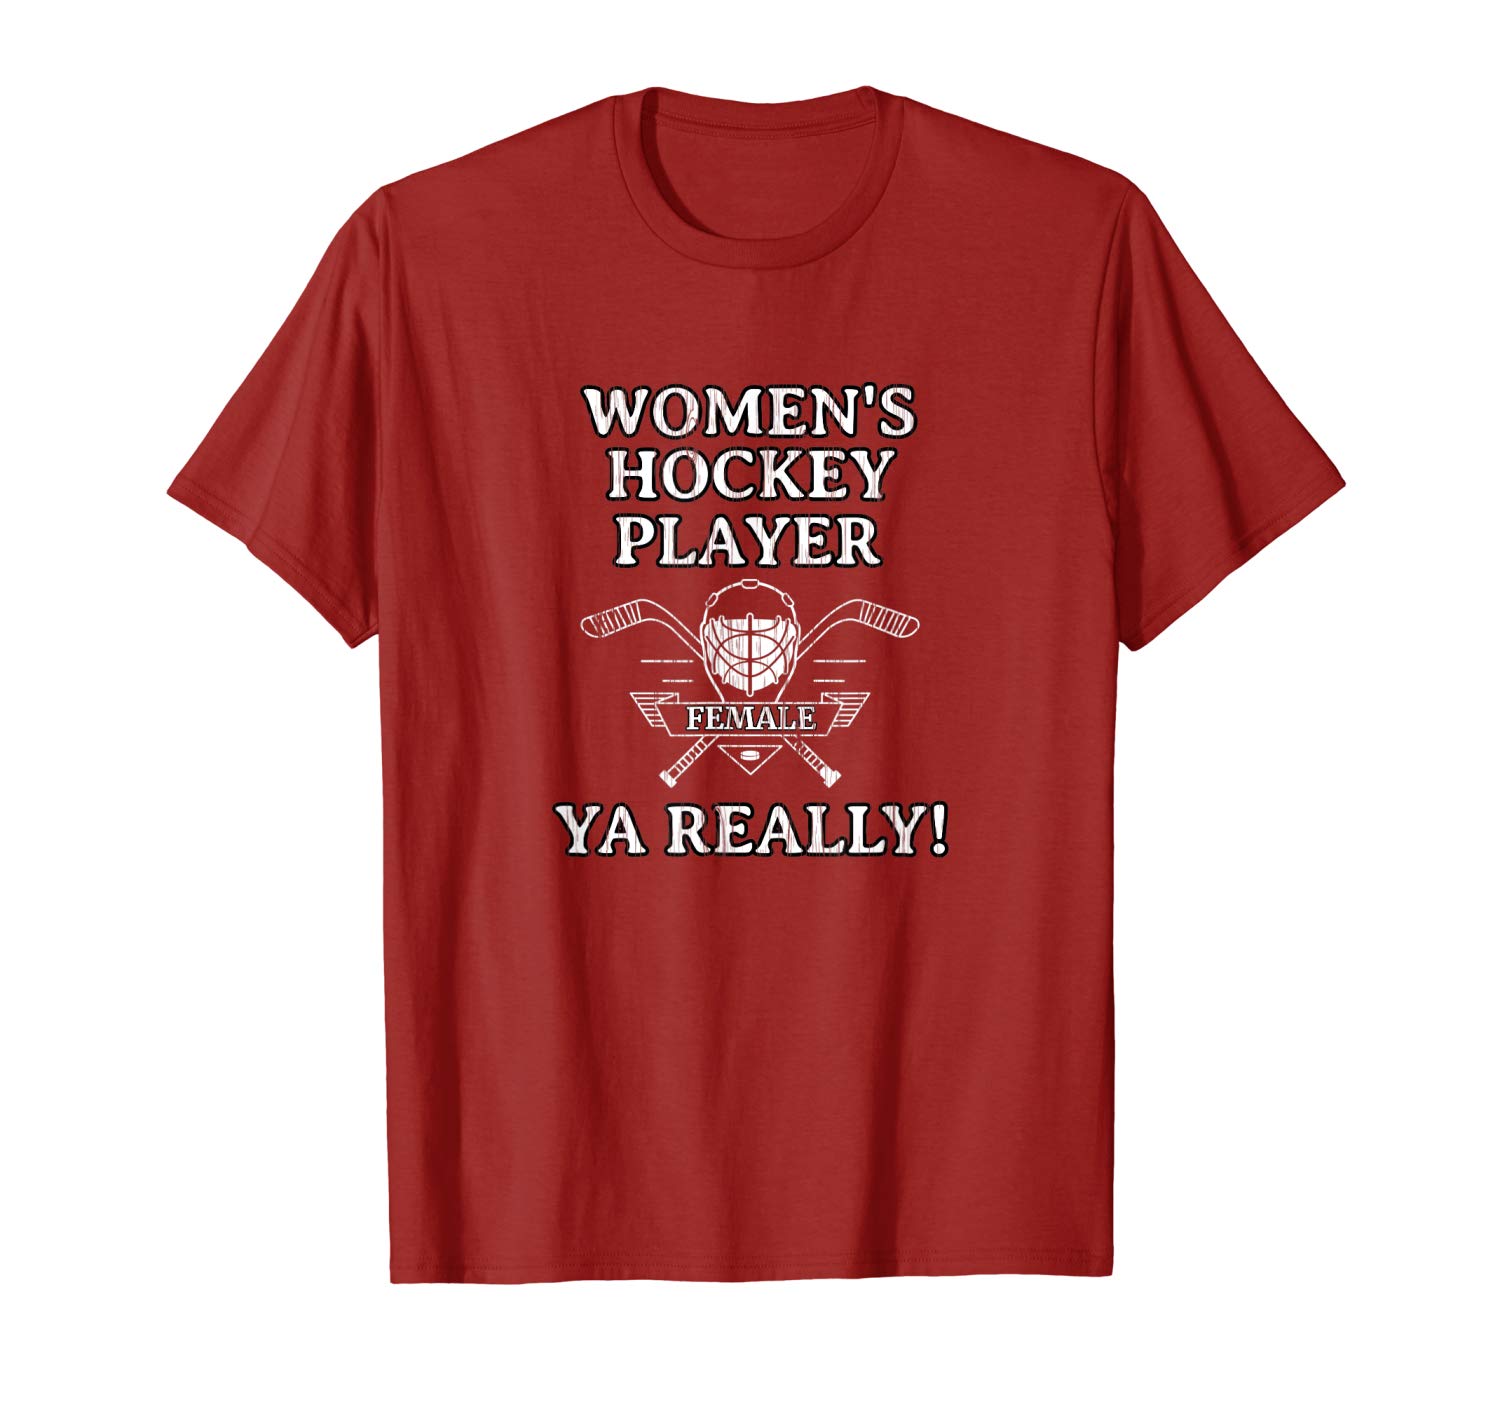 WOMENS HOCKEY PLAYER – YA REALLY! Funny Ice Hockey tshirt